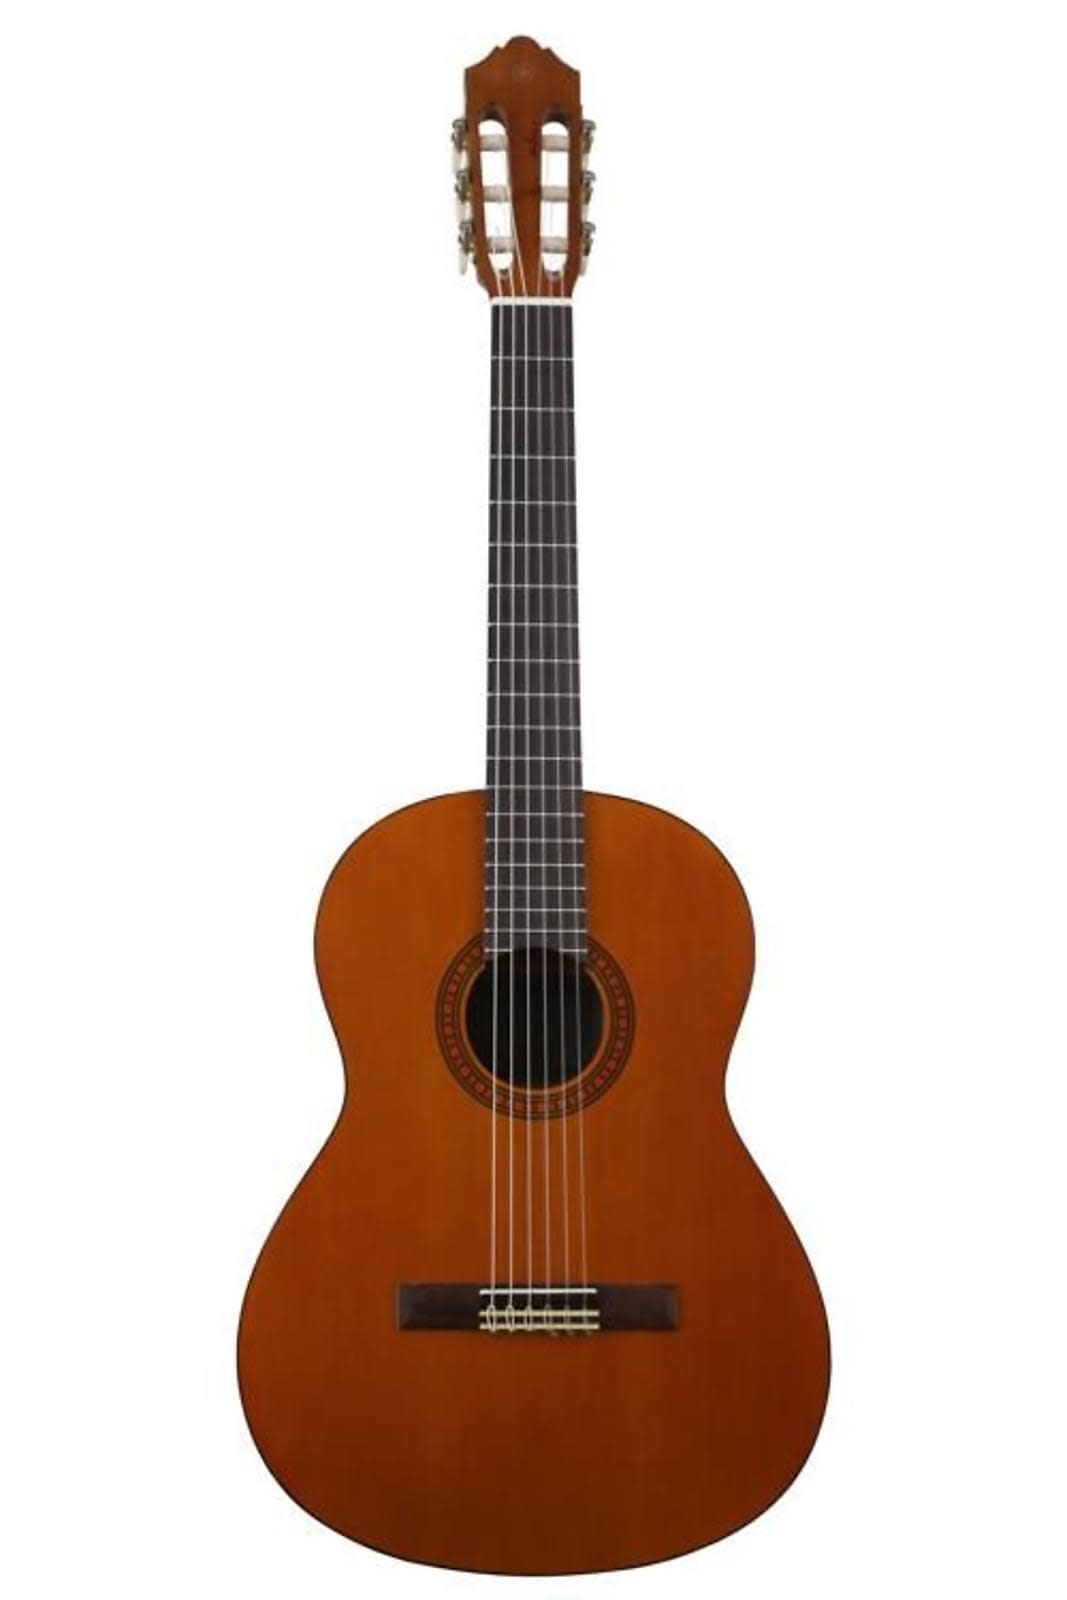 USED Yamaha CGS103 AII Natural 3/4 Scale Classical Guitar